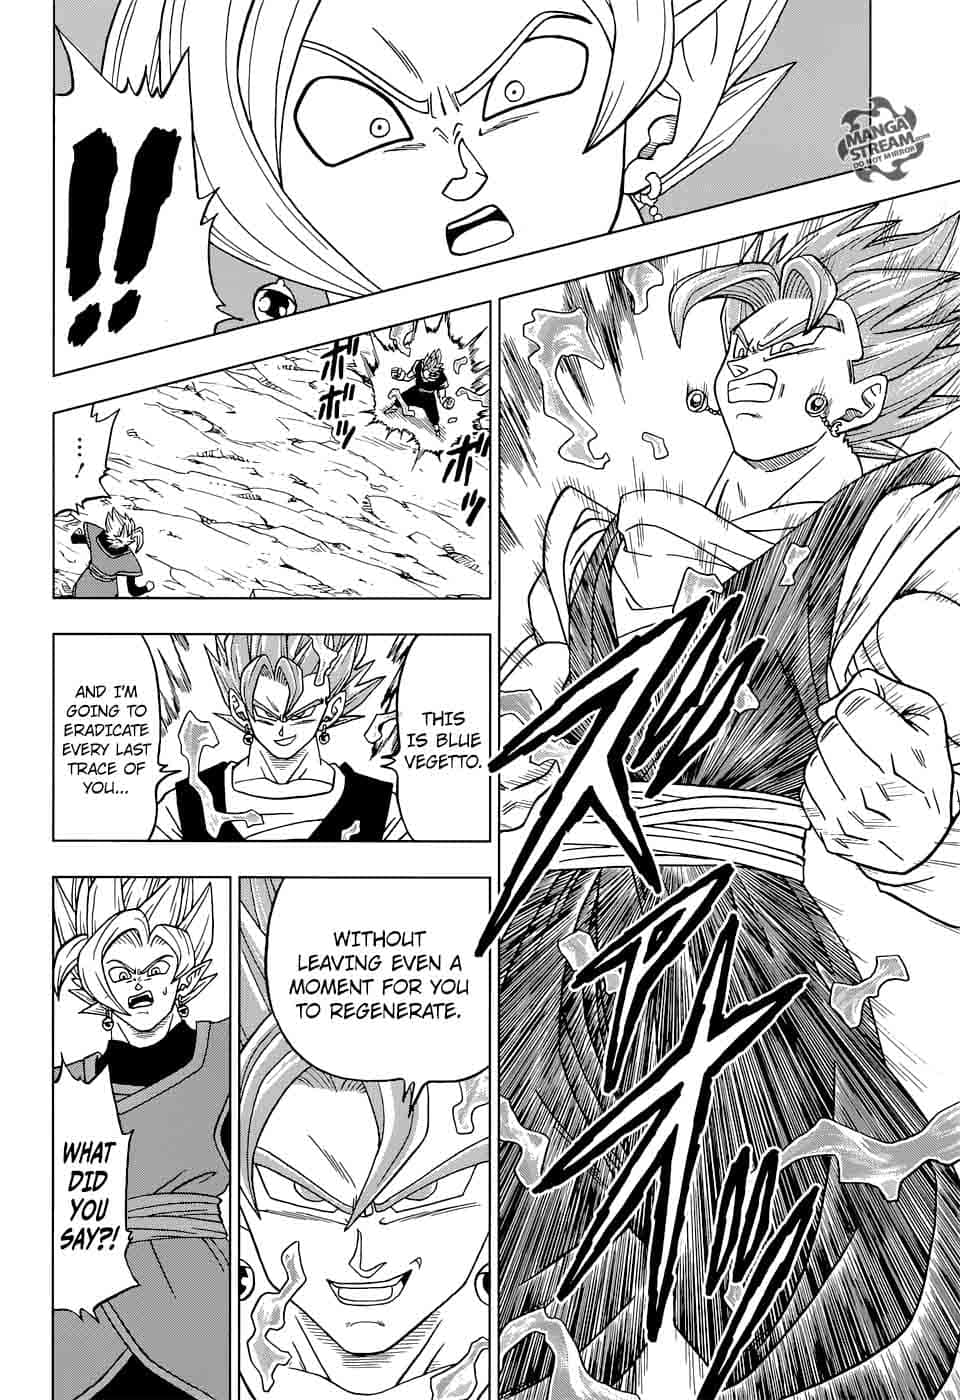 Unleash your inner power with Dragon Ball Super Manga Wallpaper